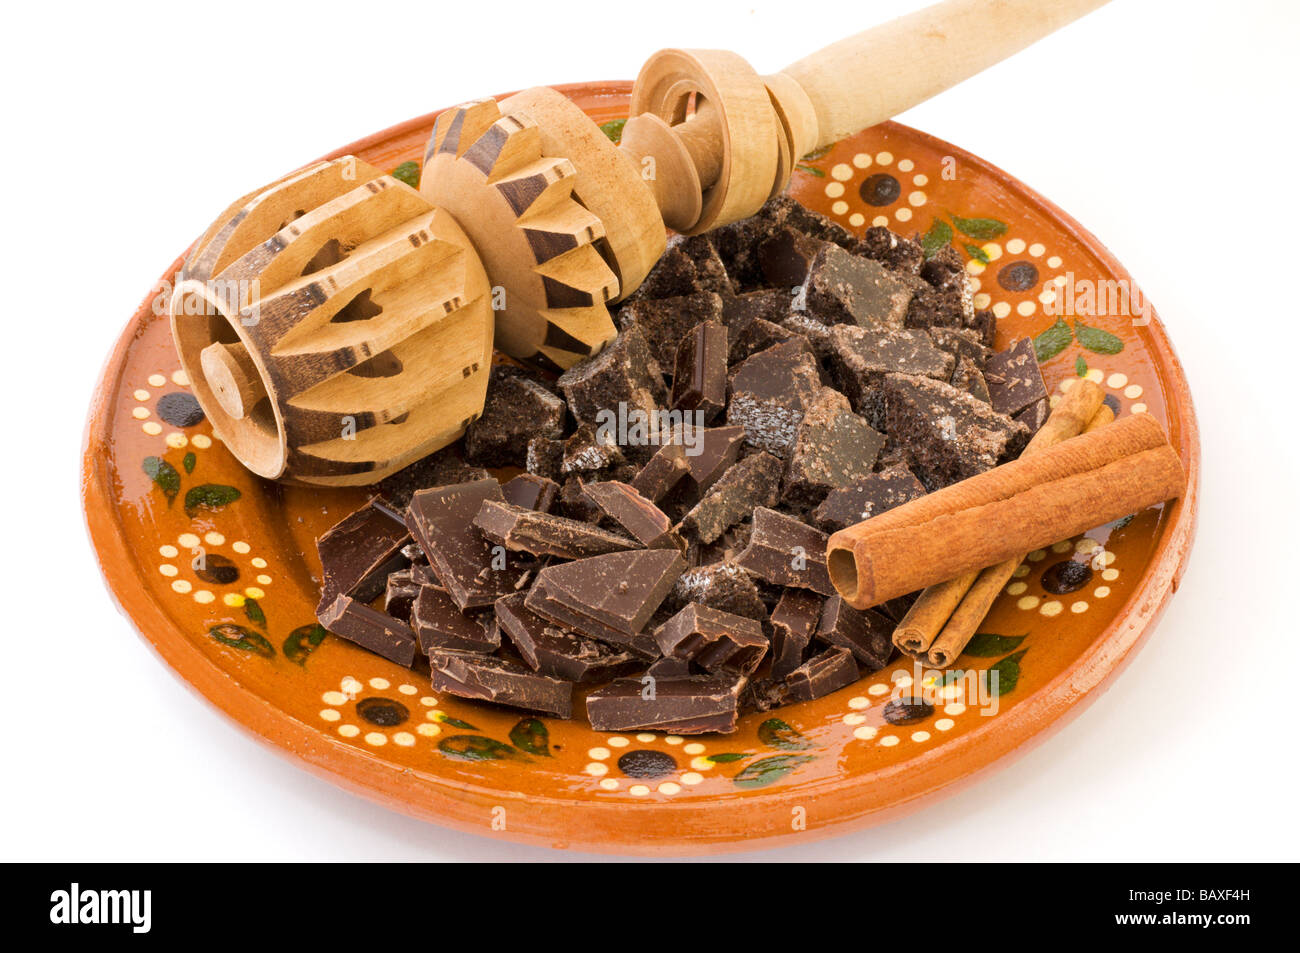 https://c8.alamy.com/comp/BAXF4H/chopped-mexican-chocolate-cinnamon-sticks-and-a-molinillo-on-a-clay-BAXF4H.jpg